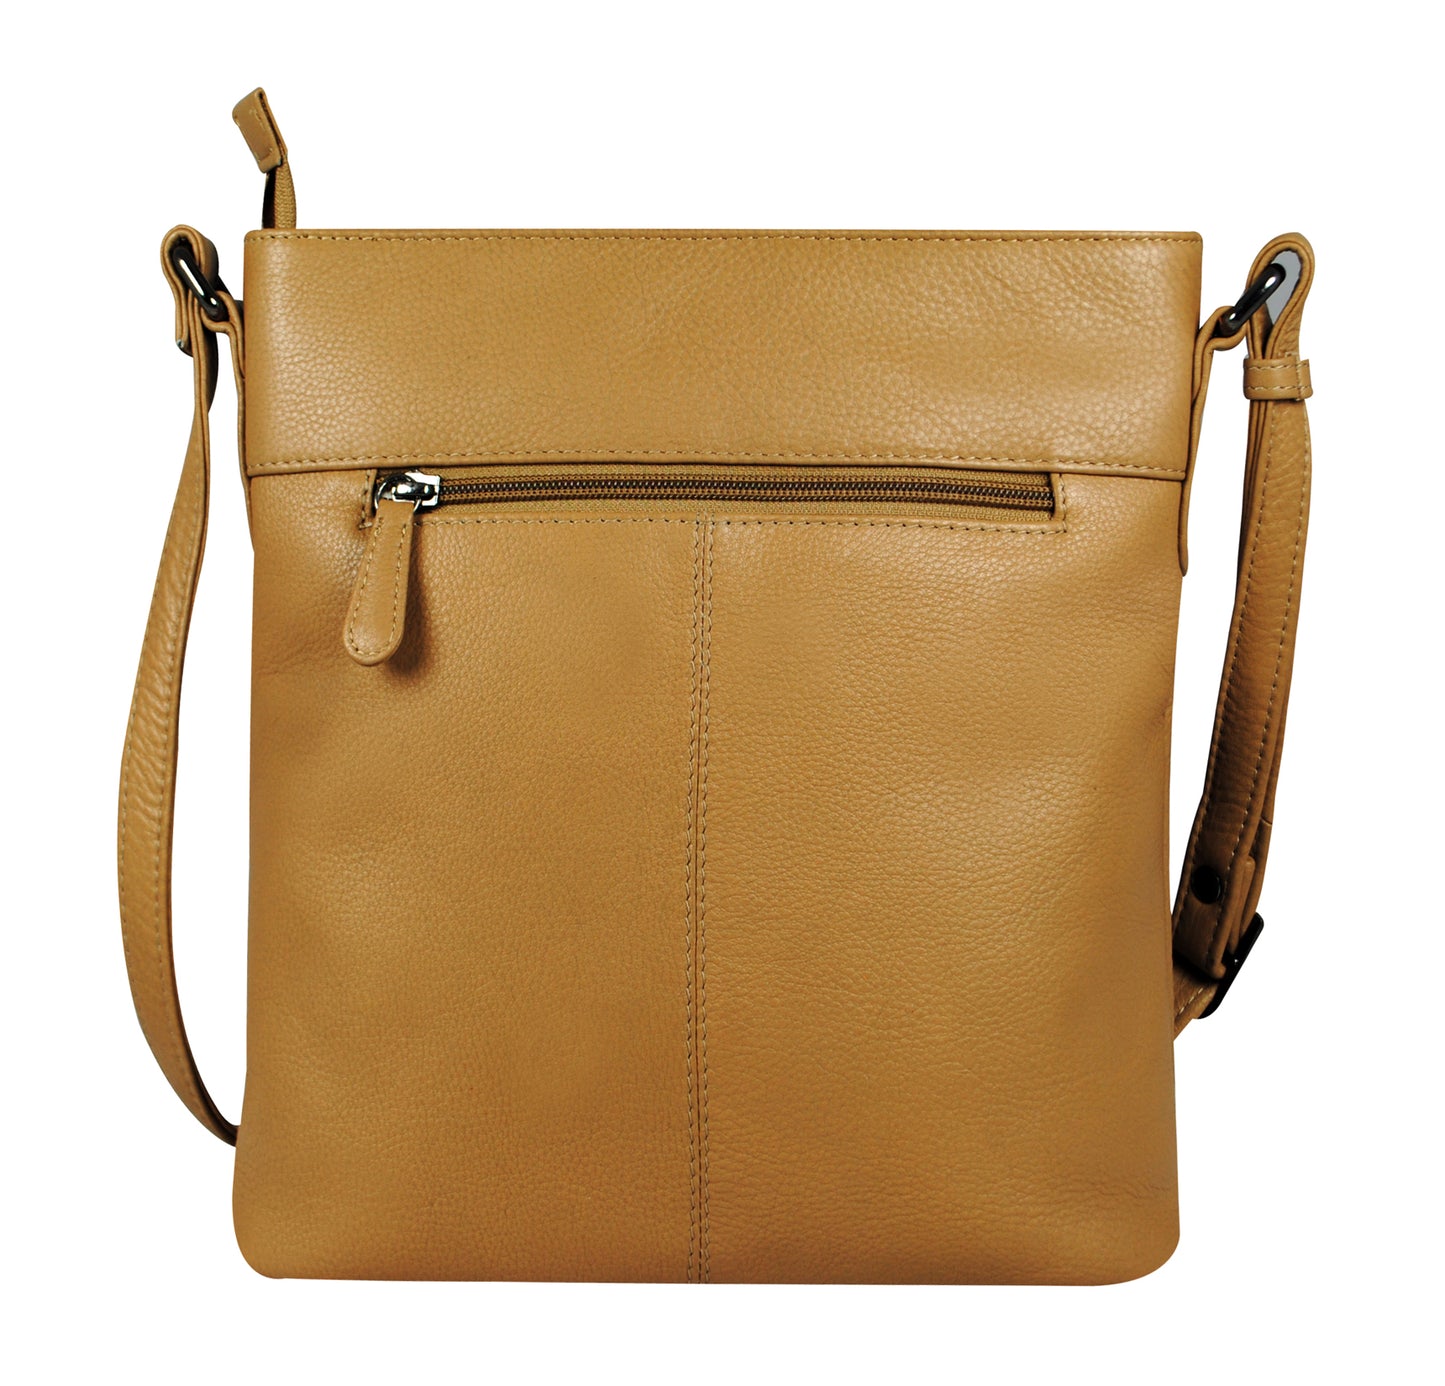 Calfnero Genuine Leather Women's Sling Bag (713680-Beige)